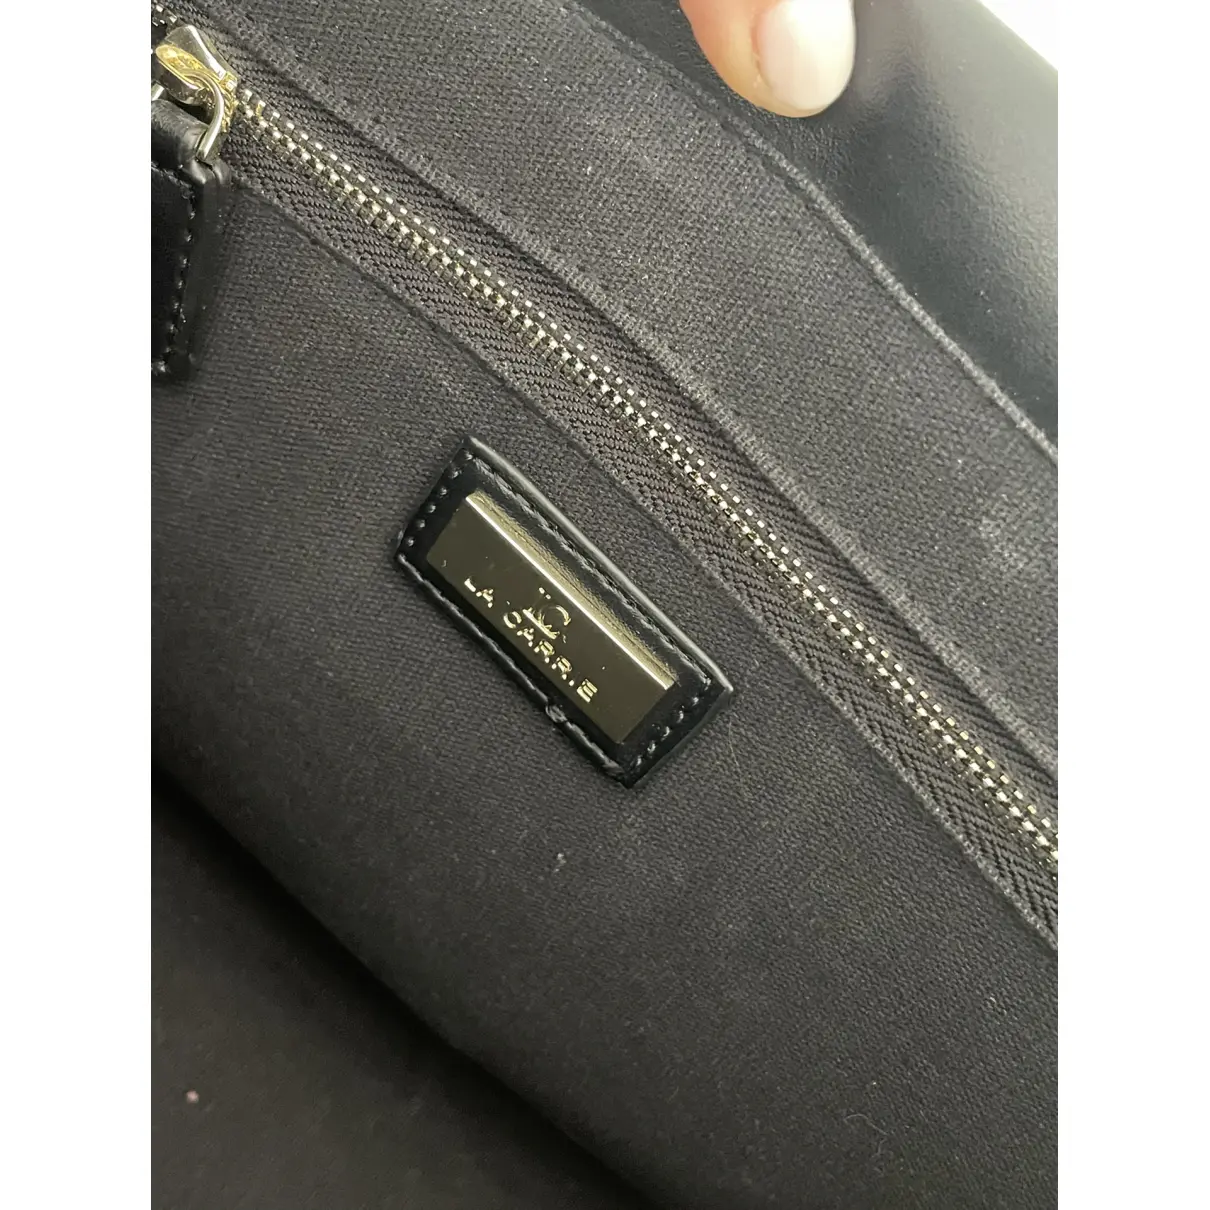 Leather handbag La carrie